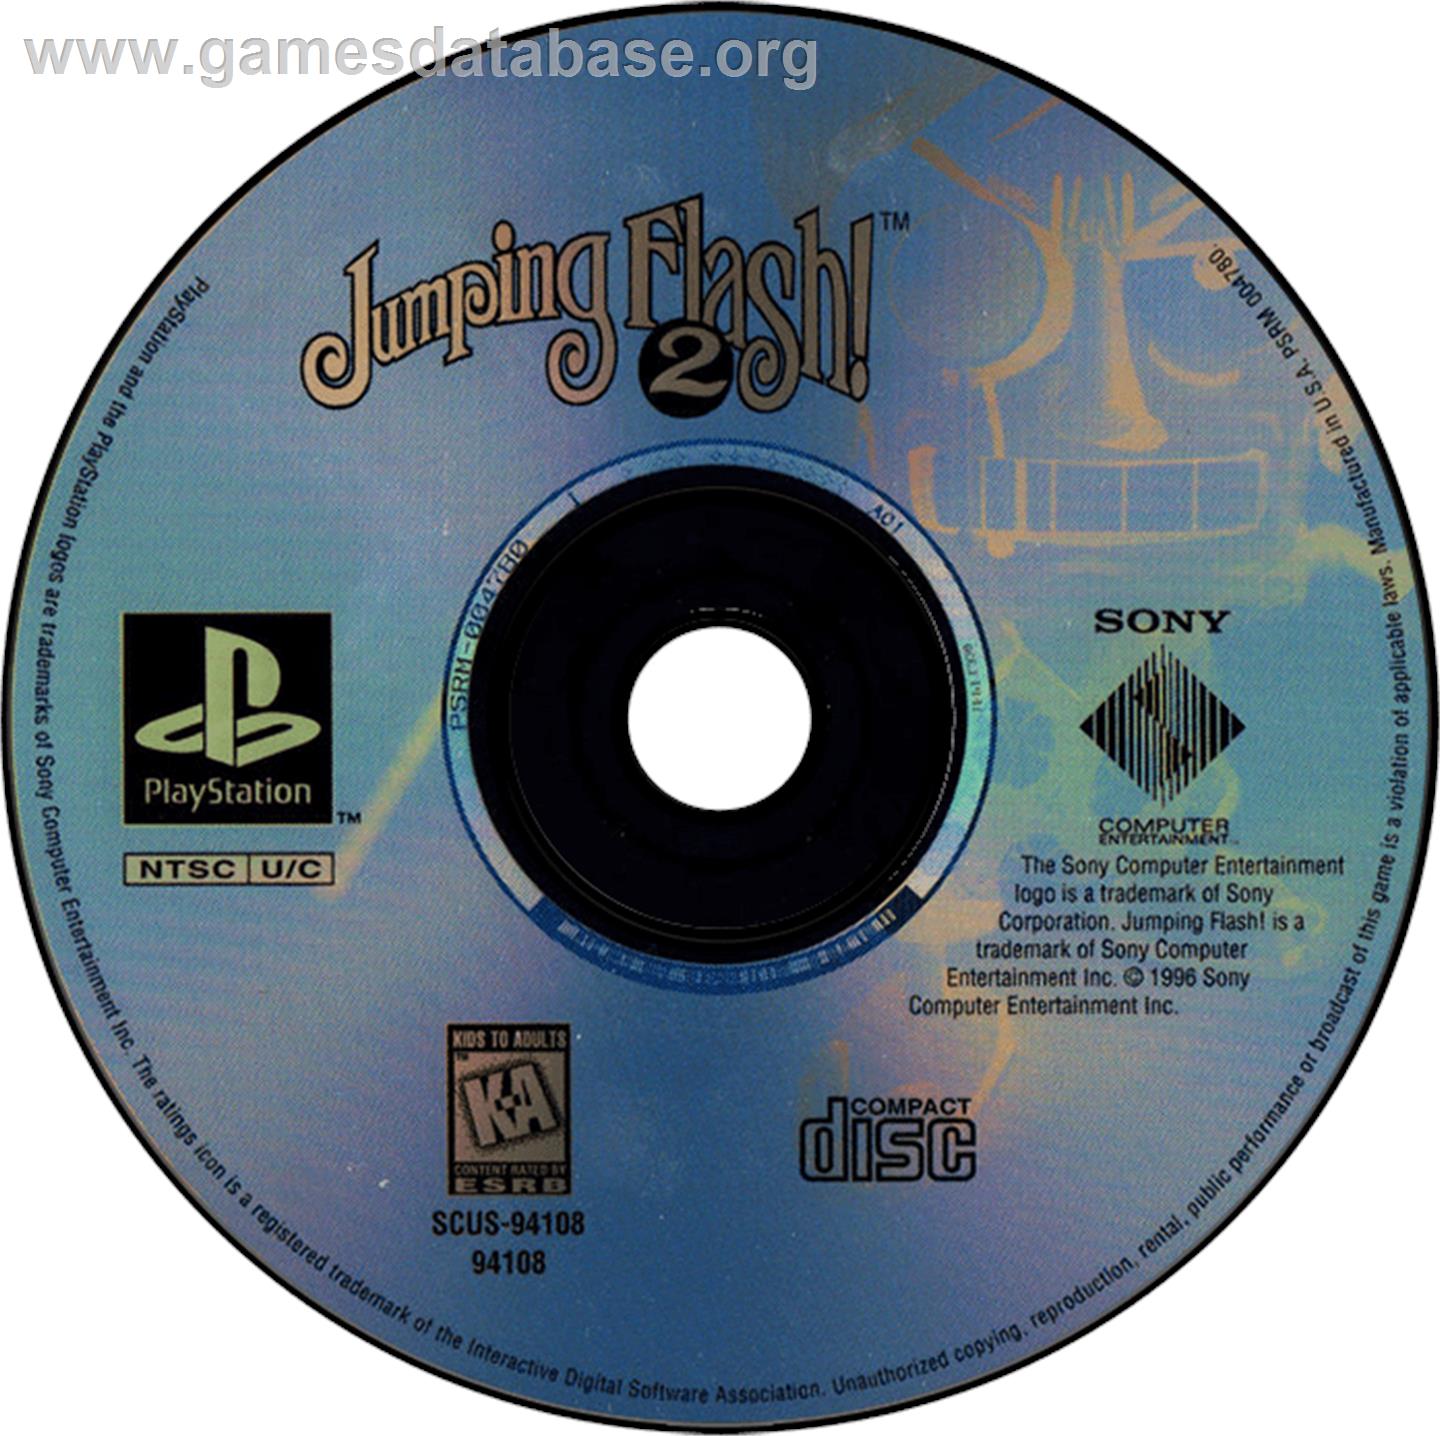 Jumping Flash! 2 - Sony Playstation - Artwork - Disc